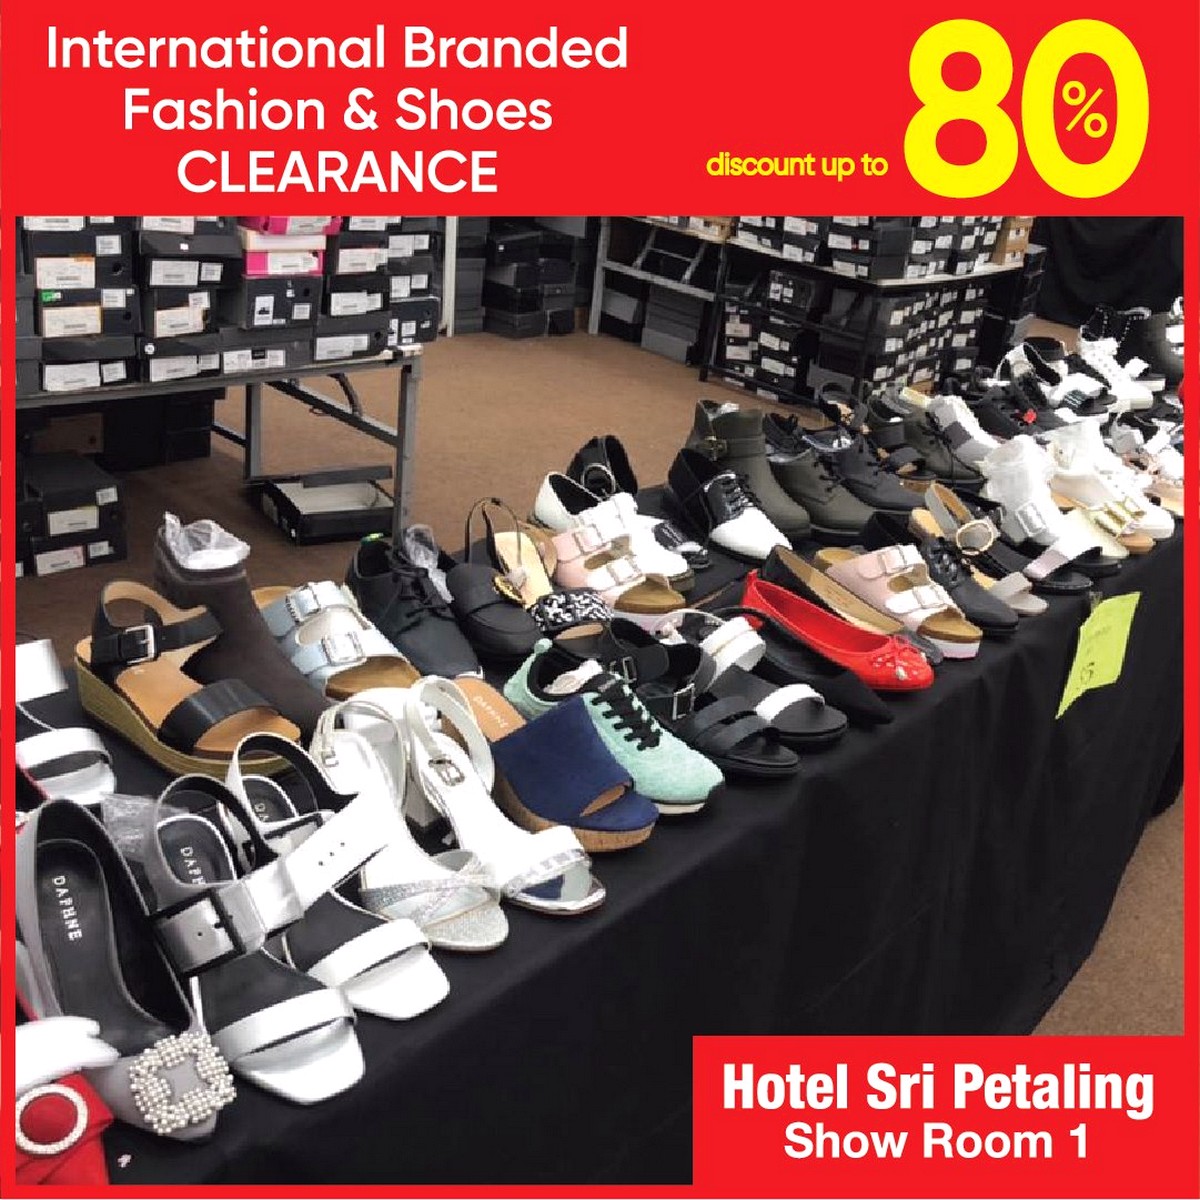 Hotel-Sri-Petaling-Warehouse-Sale-2021-10 - Apparels Fashion Accessories Fashion Lifestyle & Department Store Kuala Lumpur Selangor Warehouse Sale & Clearance in Malaysia 